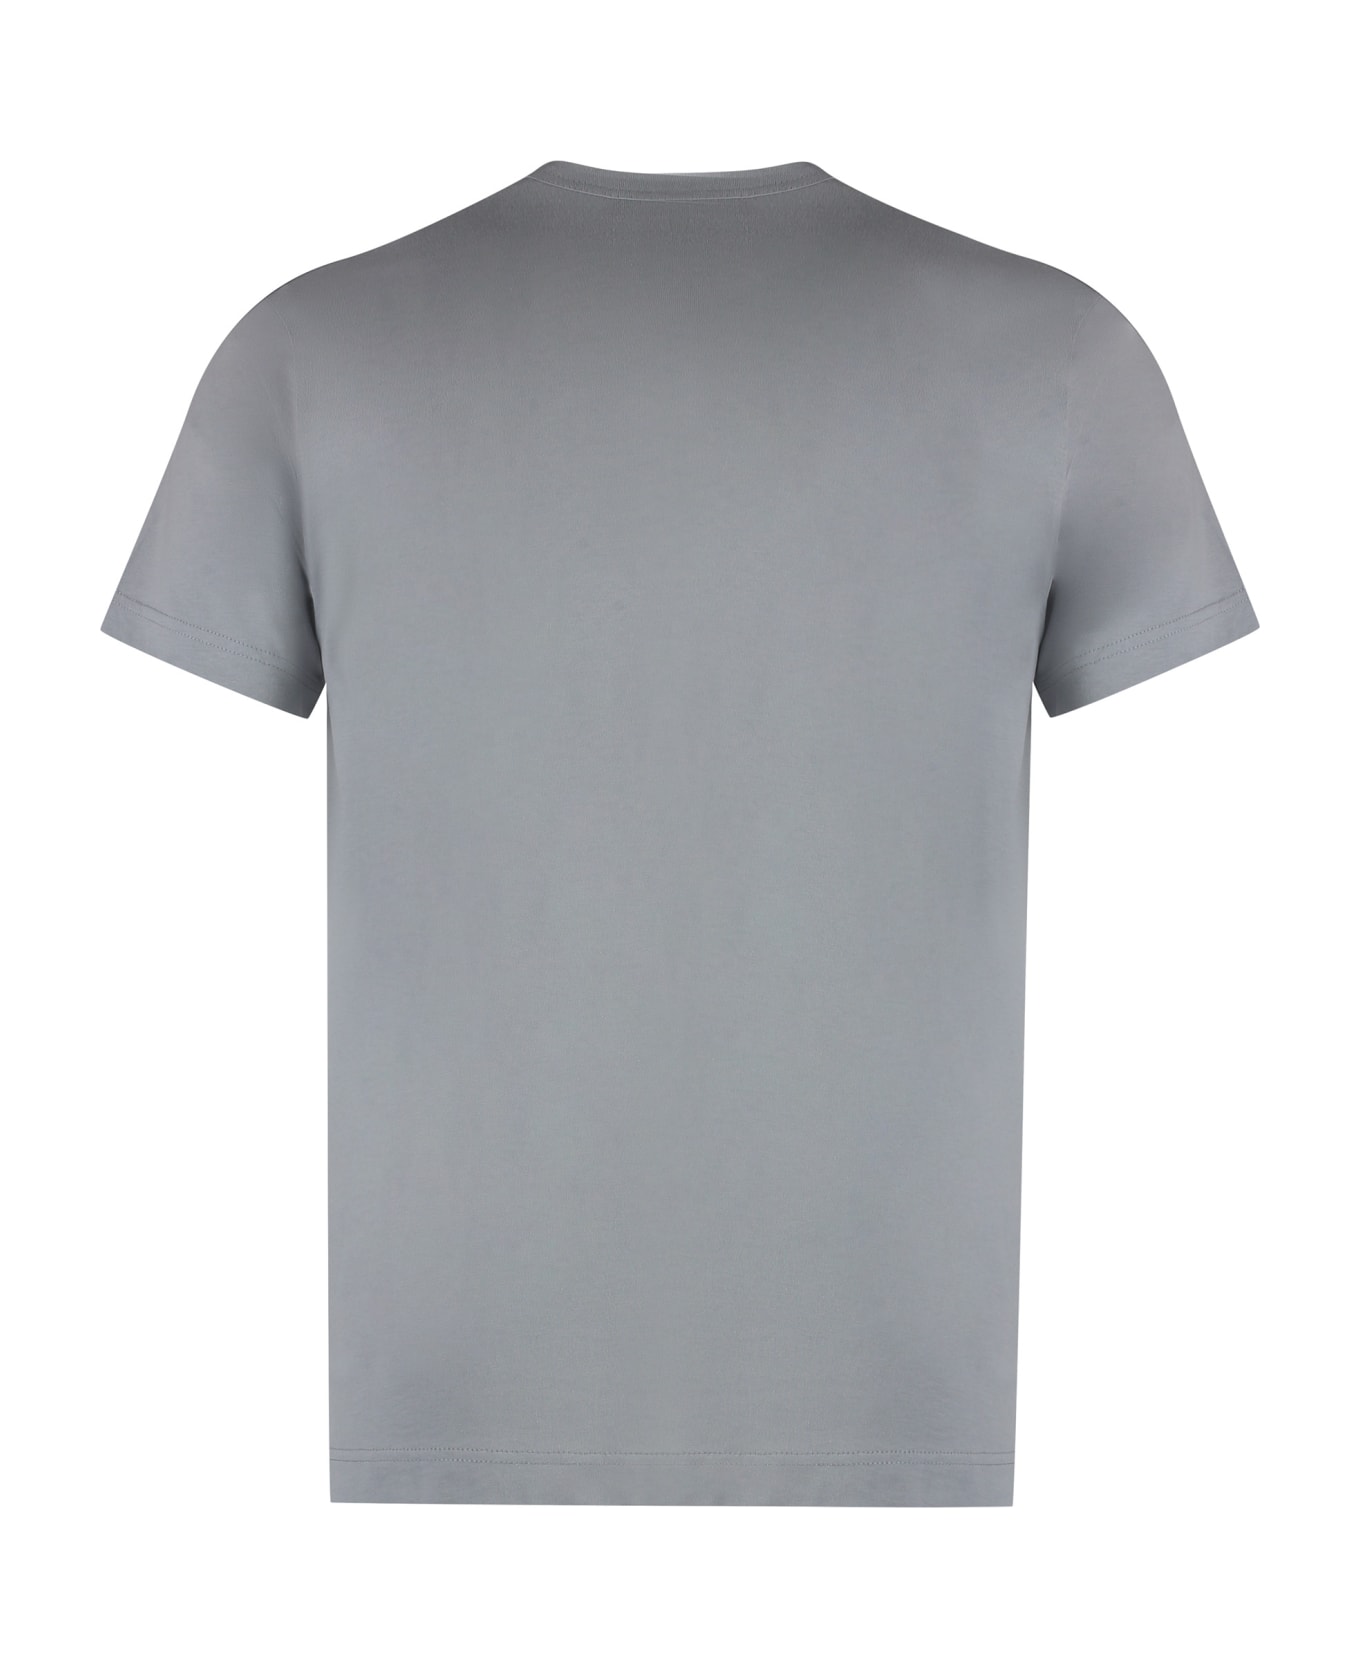 Comme des Garçons Shirt Cotton Crew-neck T-shirt - grey